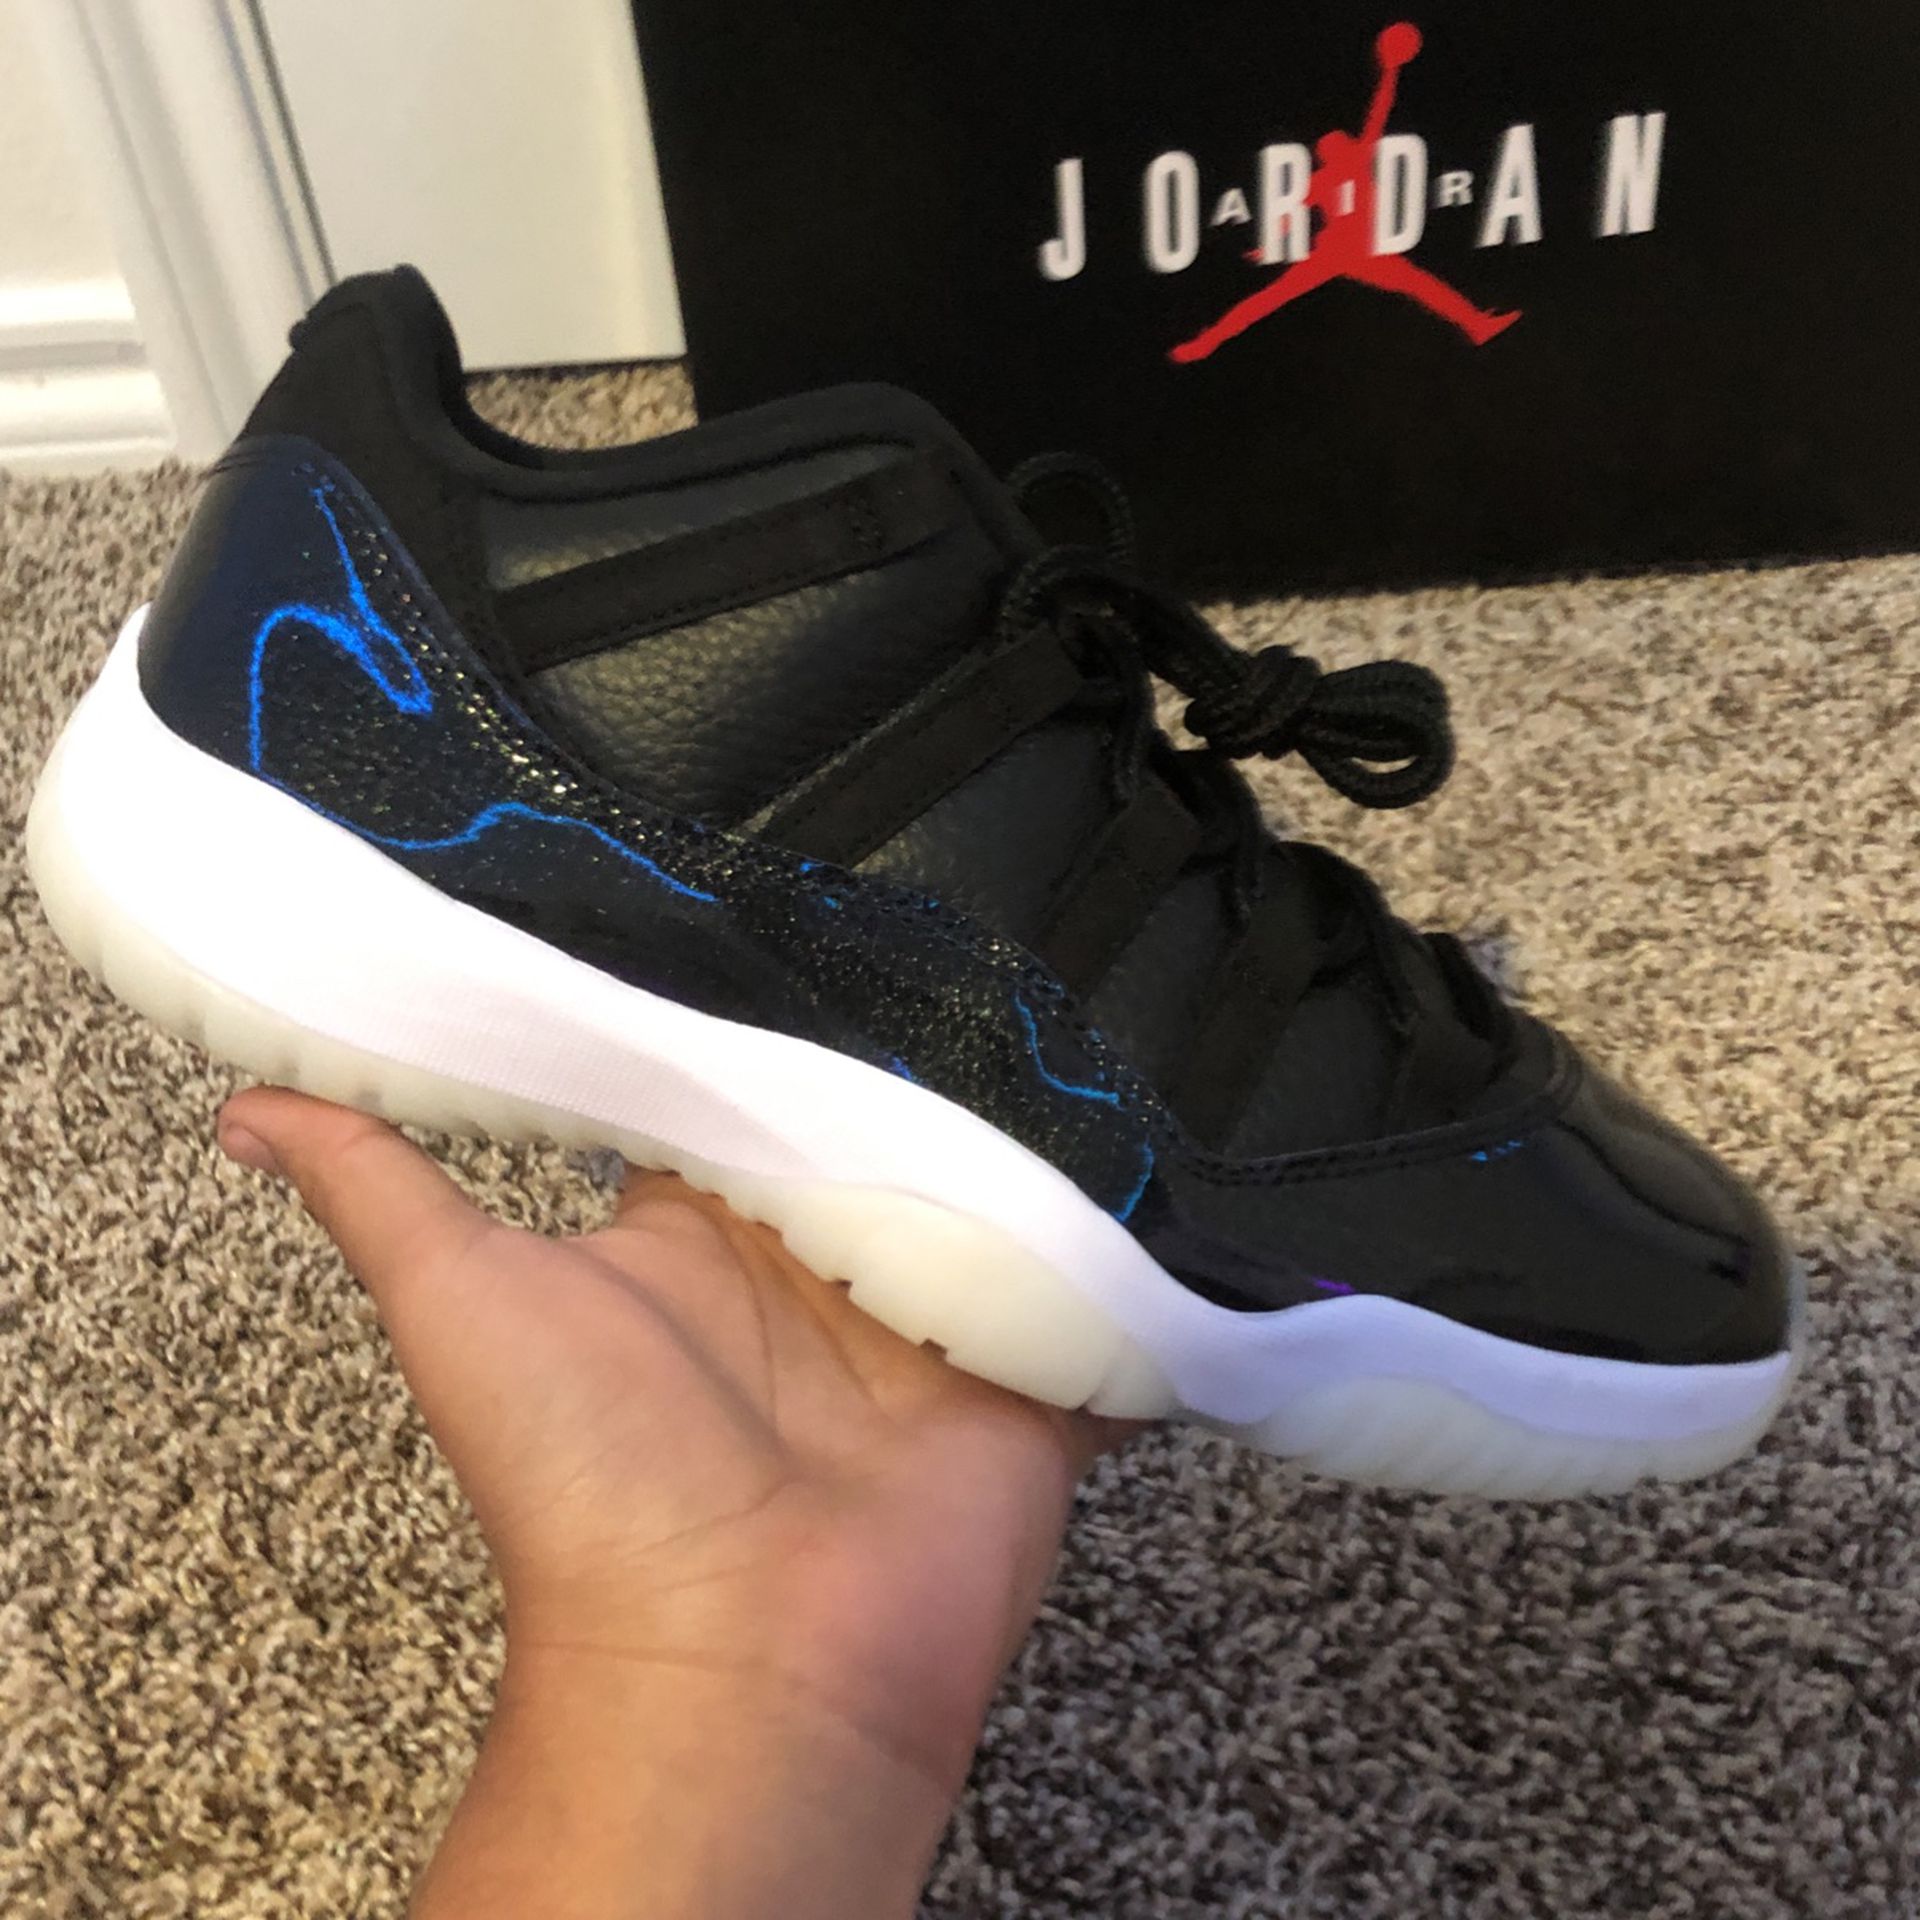 Jordan 11 Low 72-10 Size 9